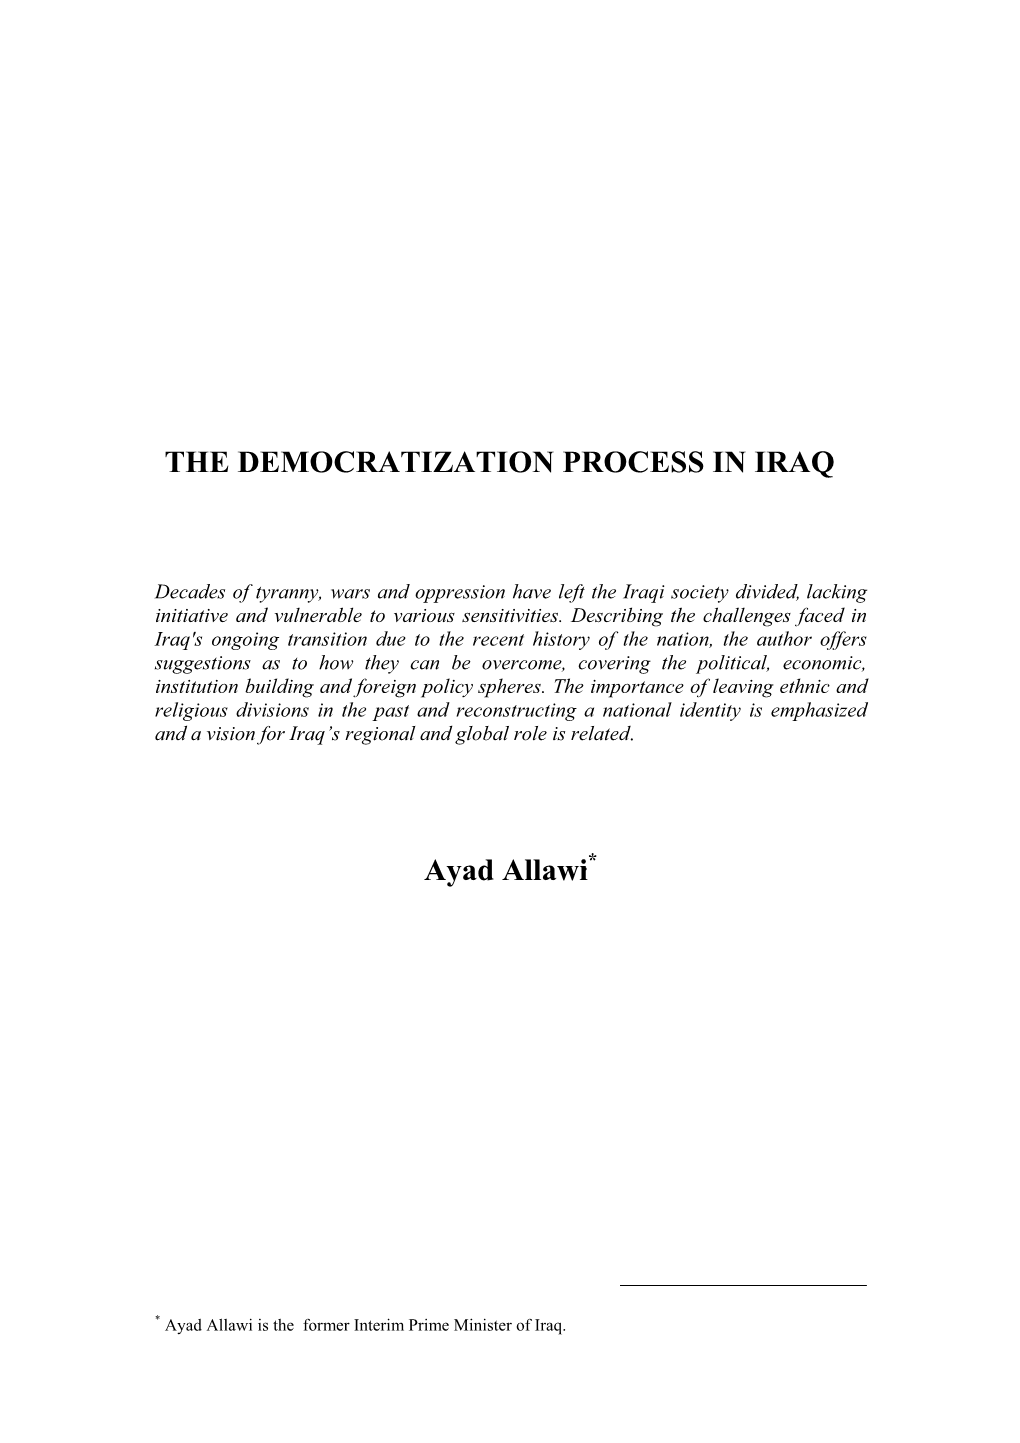 THE DEMOCRATIZATION PROCESS in IRAQ Ayad Allawi